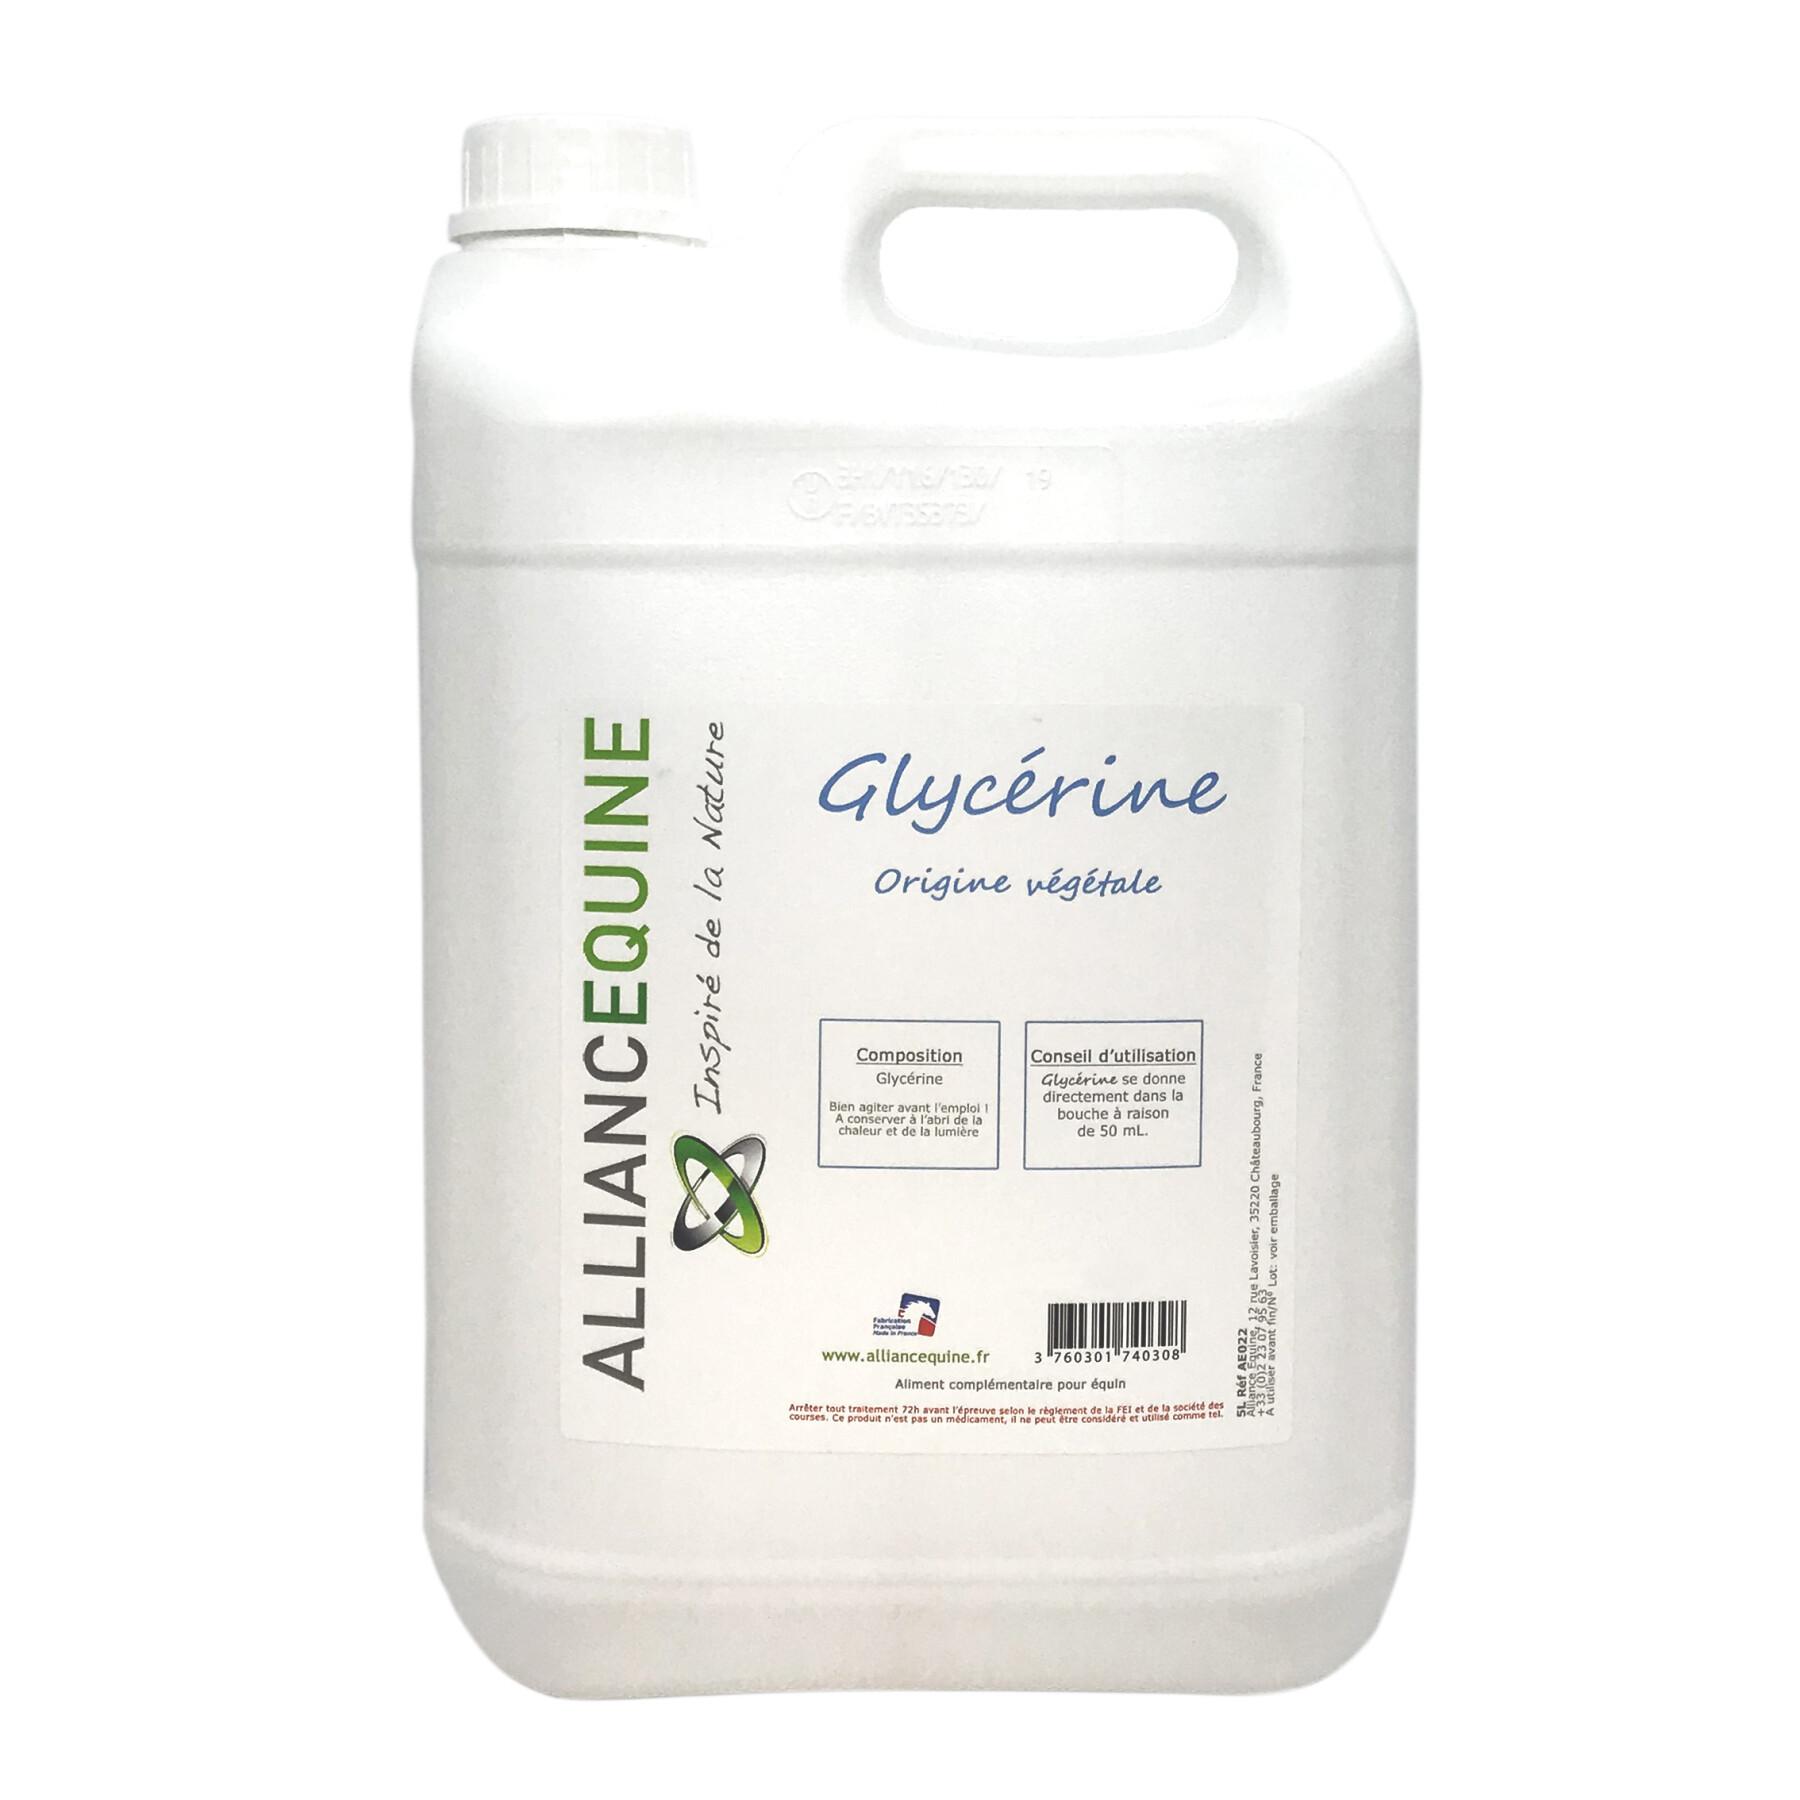 Glycerin Supplement Alliance Equine